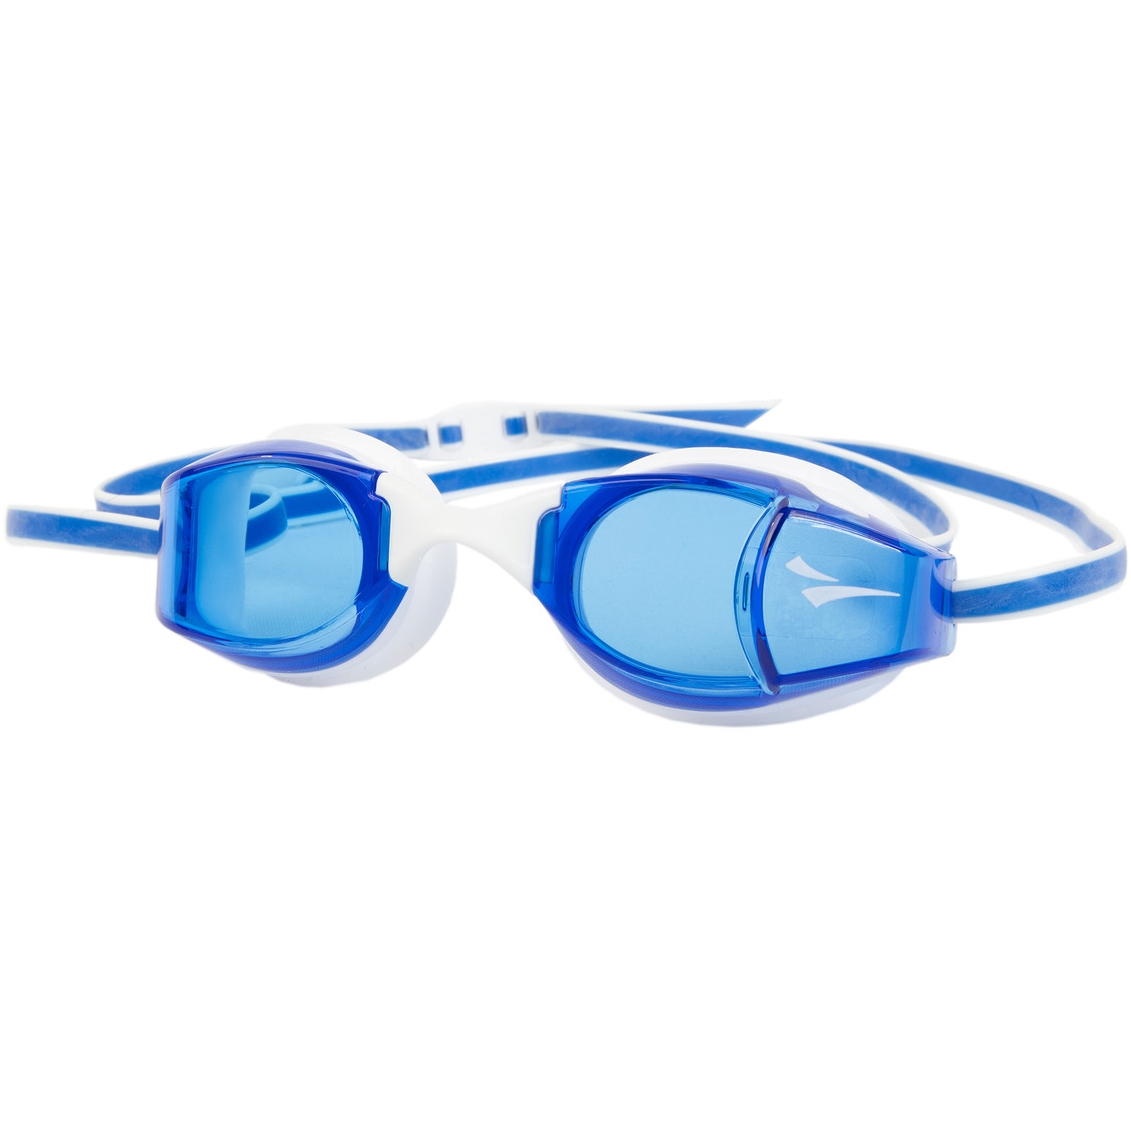 Productfoto van FINIS, Inc. Smart Goggle - blue